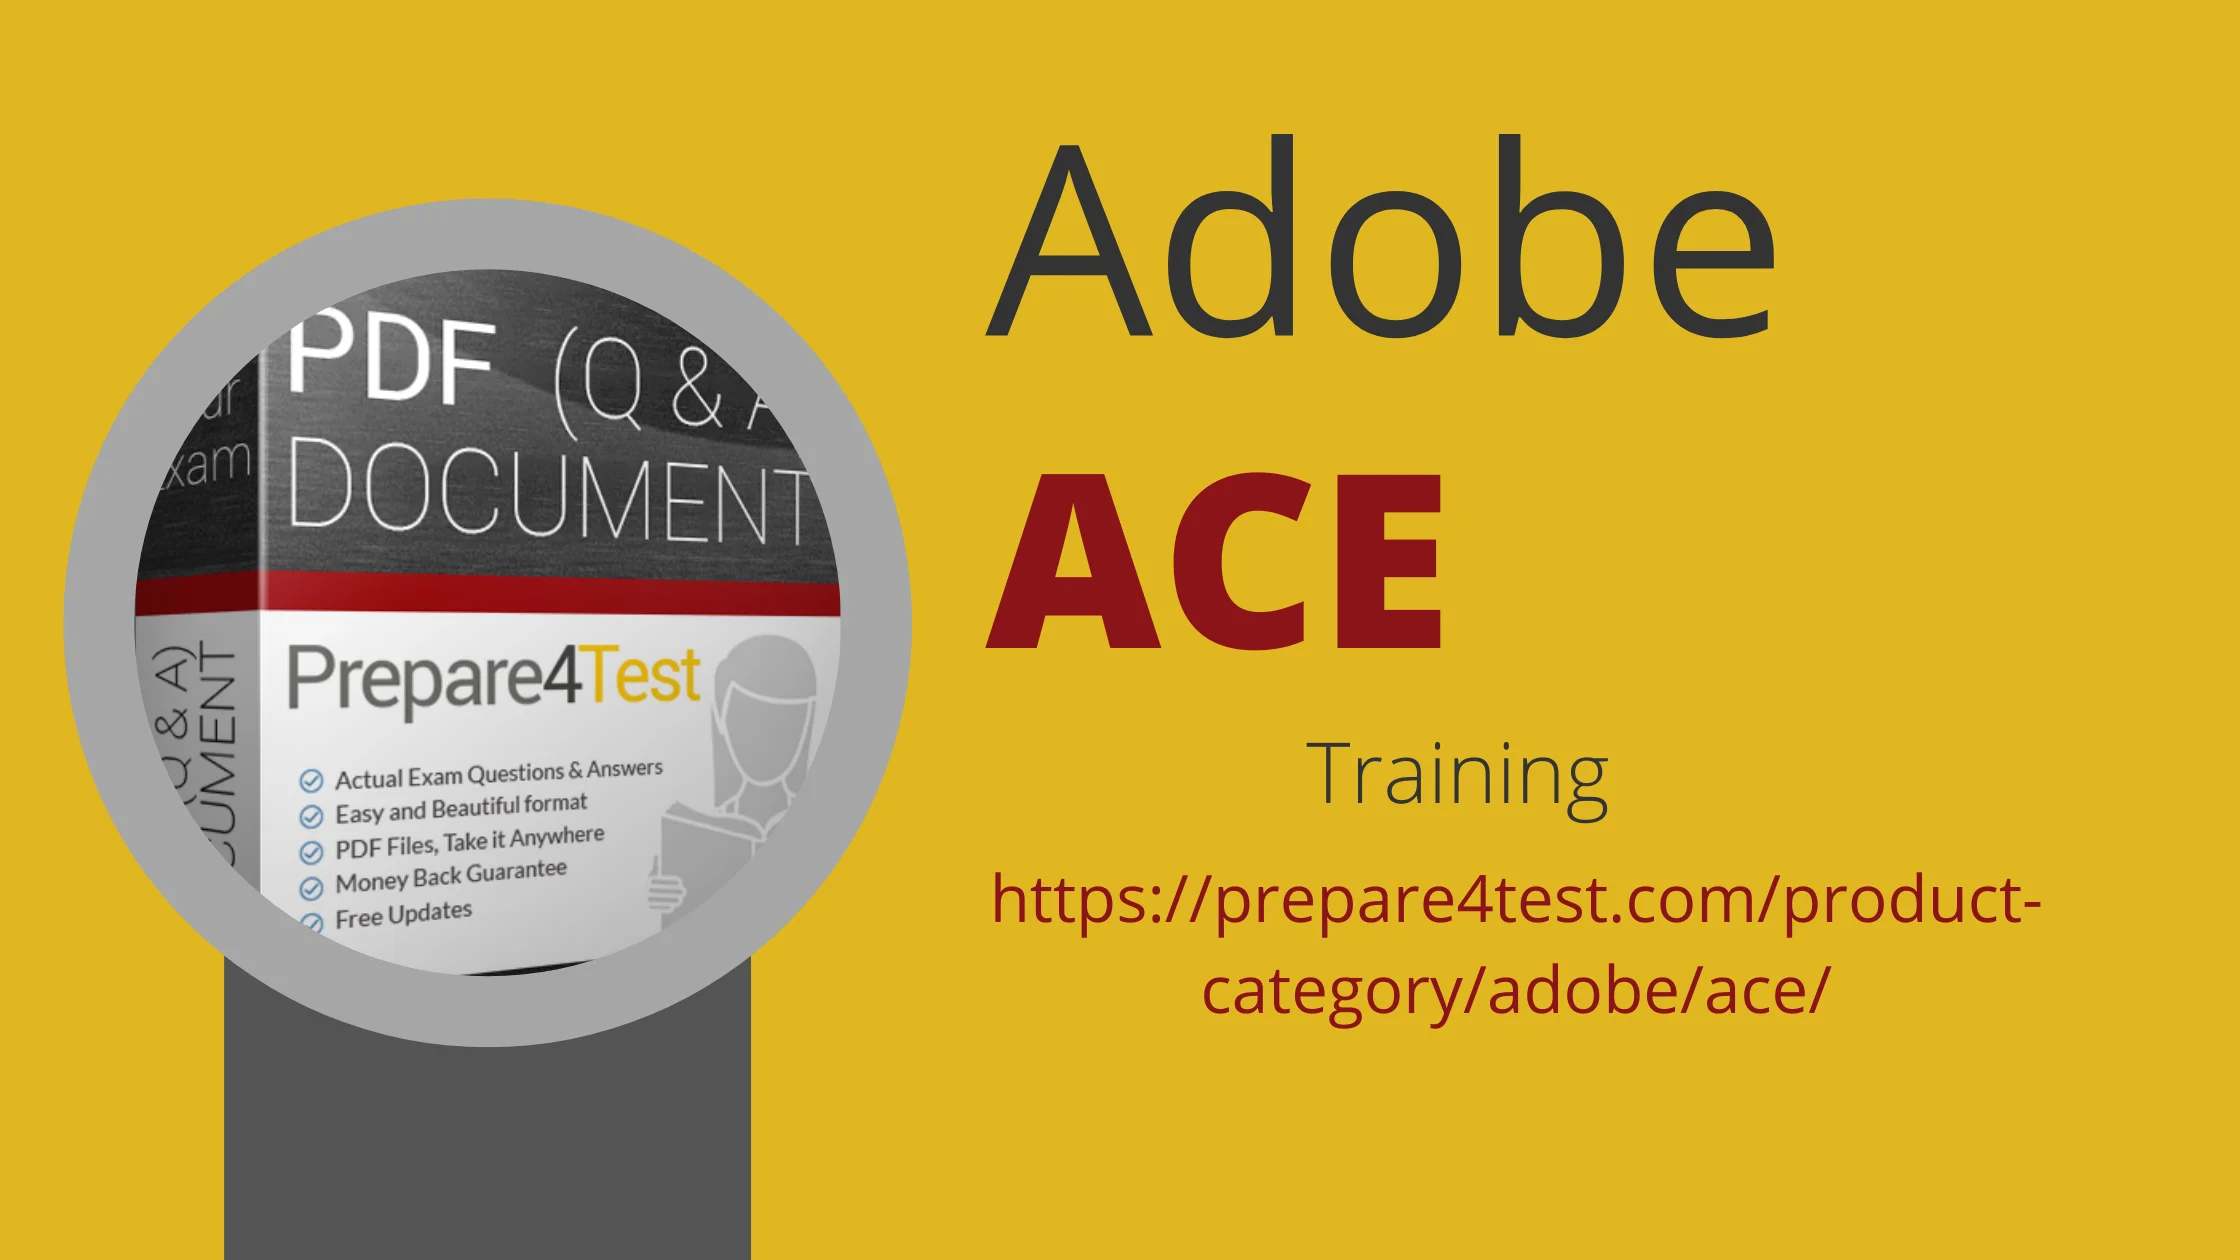 Adobe ACE Training